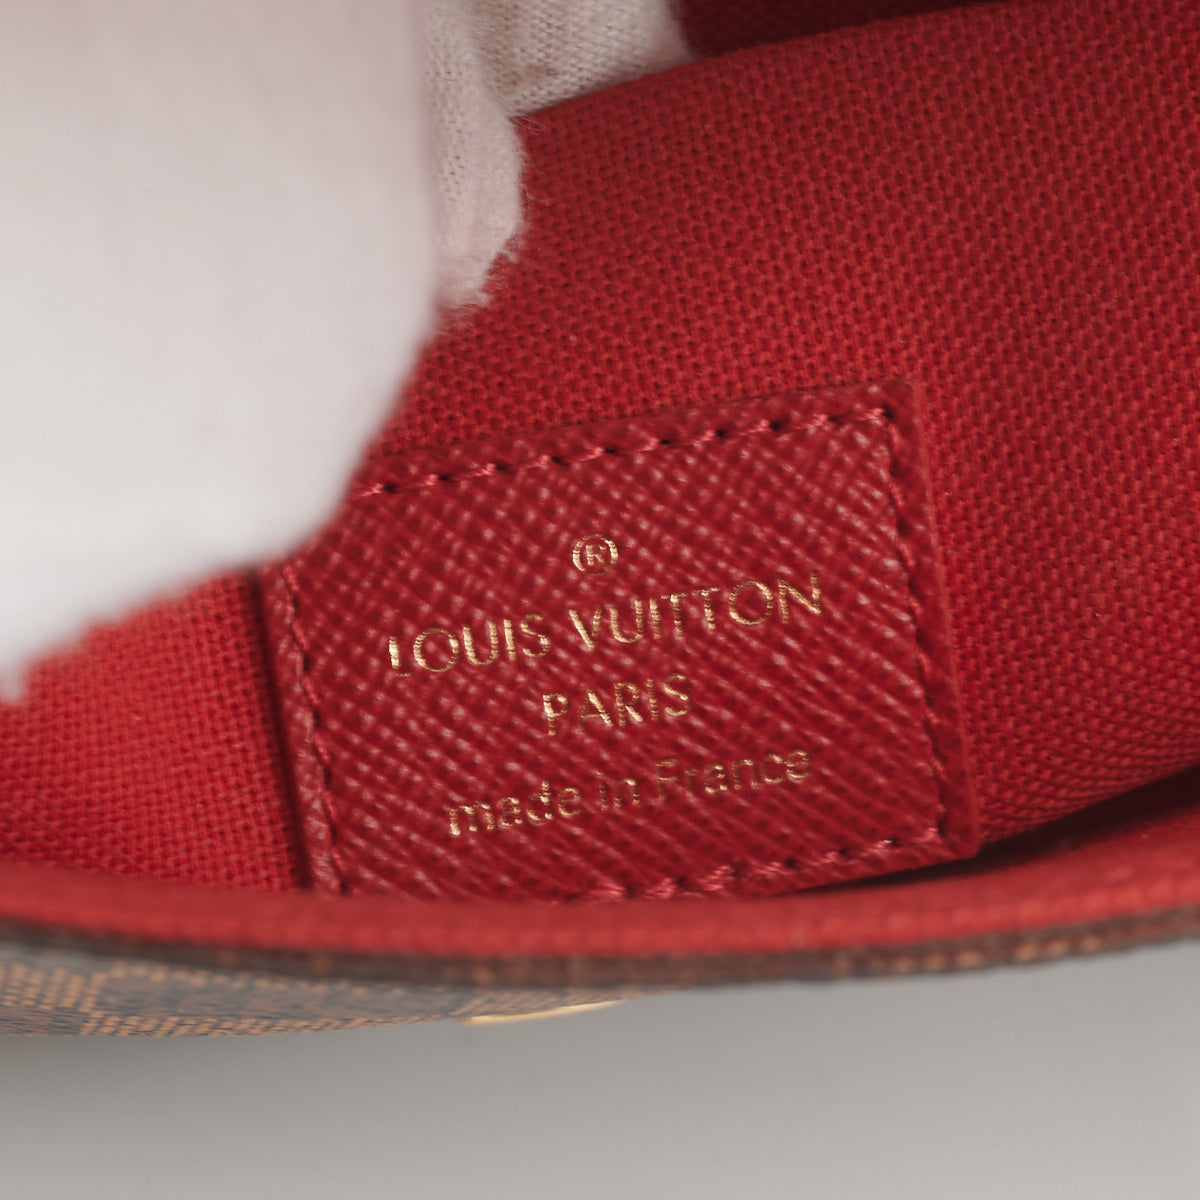 Louis Vuitton Felicie Pochette Damier Ebene - THE PURSE AFFAIR